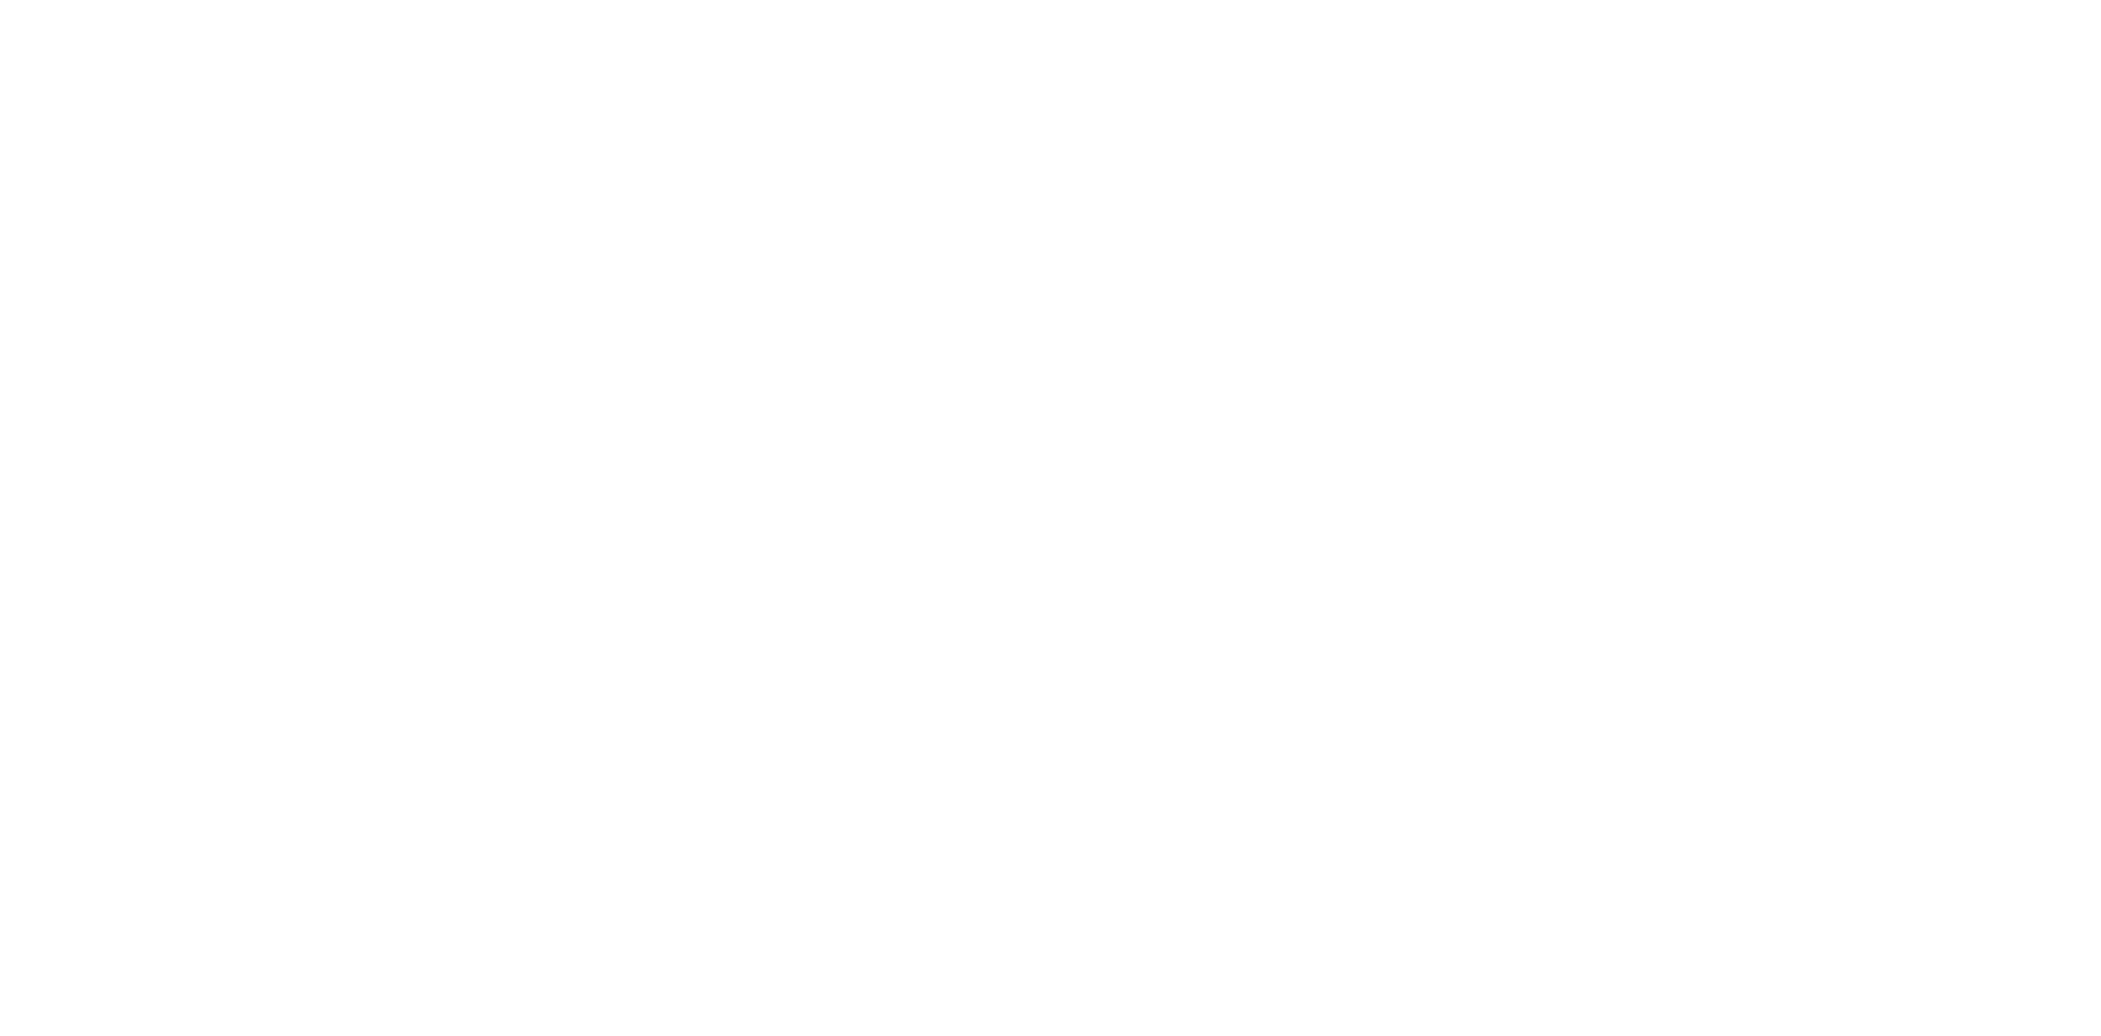 Surfrider Foundation Pacific Rim